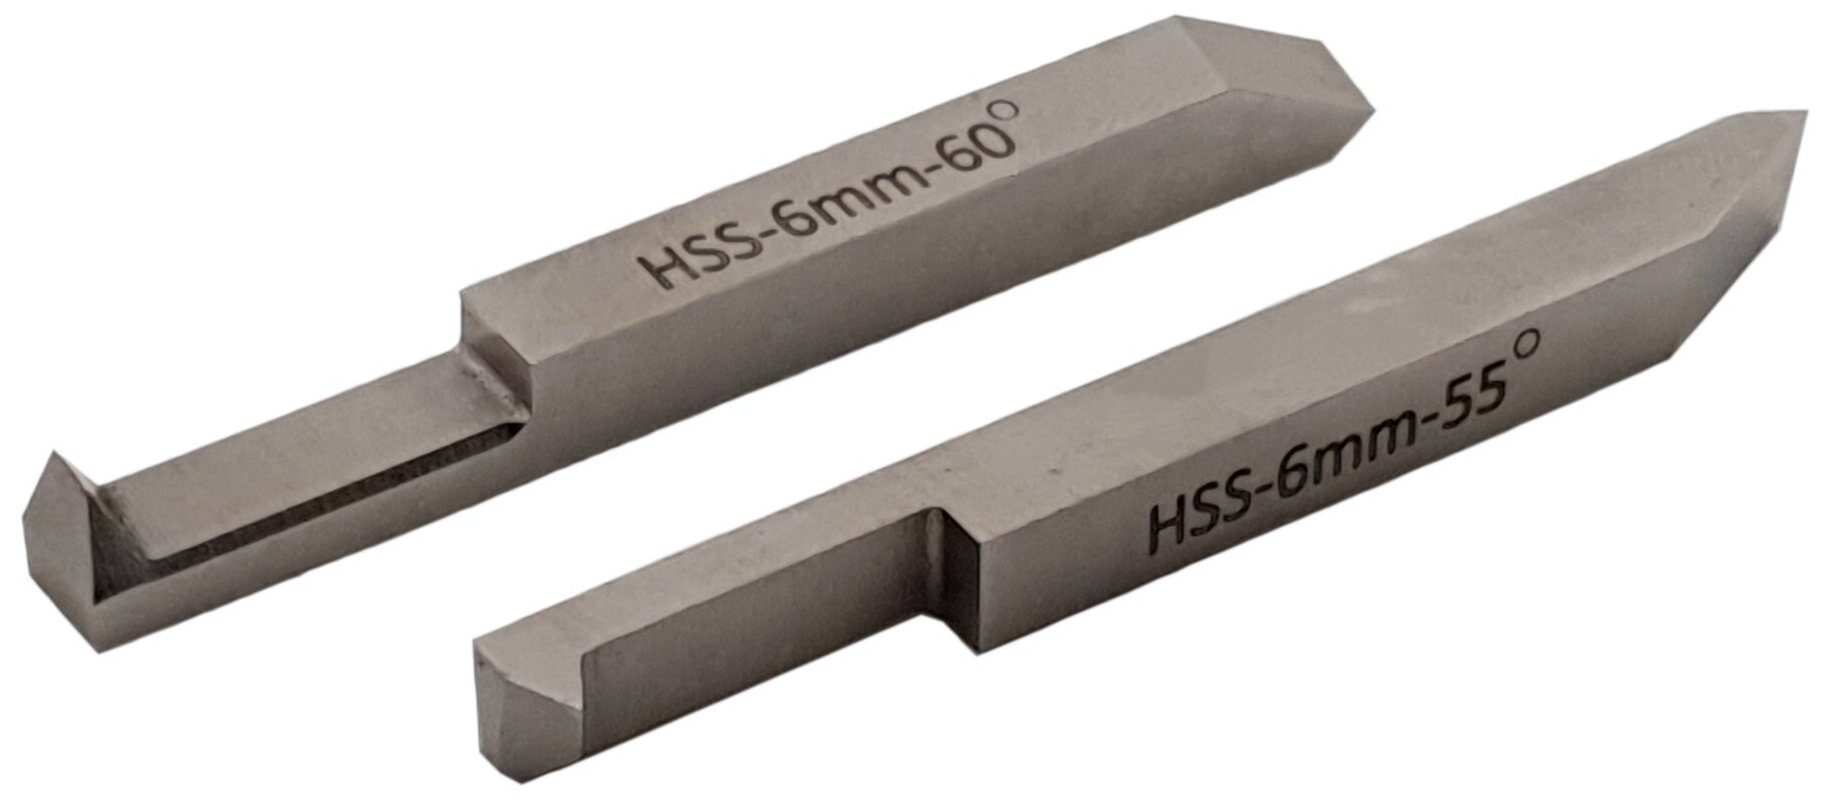 Комплект двухсторонних резцов HSS технореал для метрической и дюймовой резьбы 6х6мм